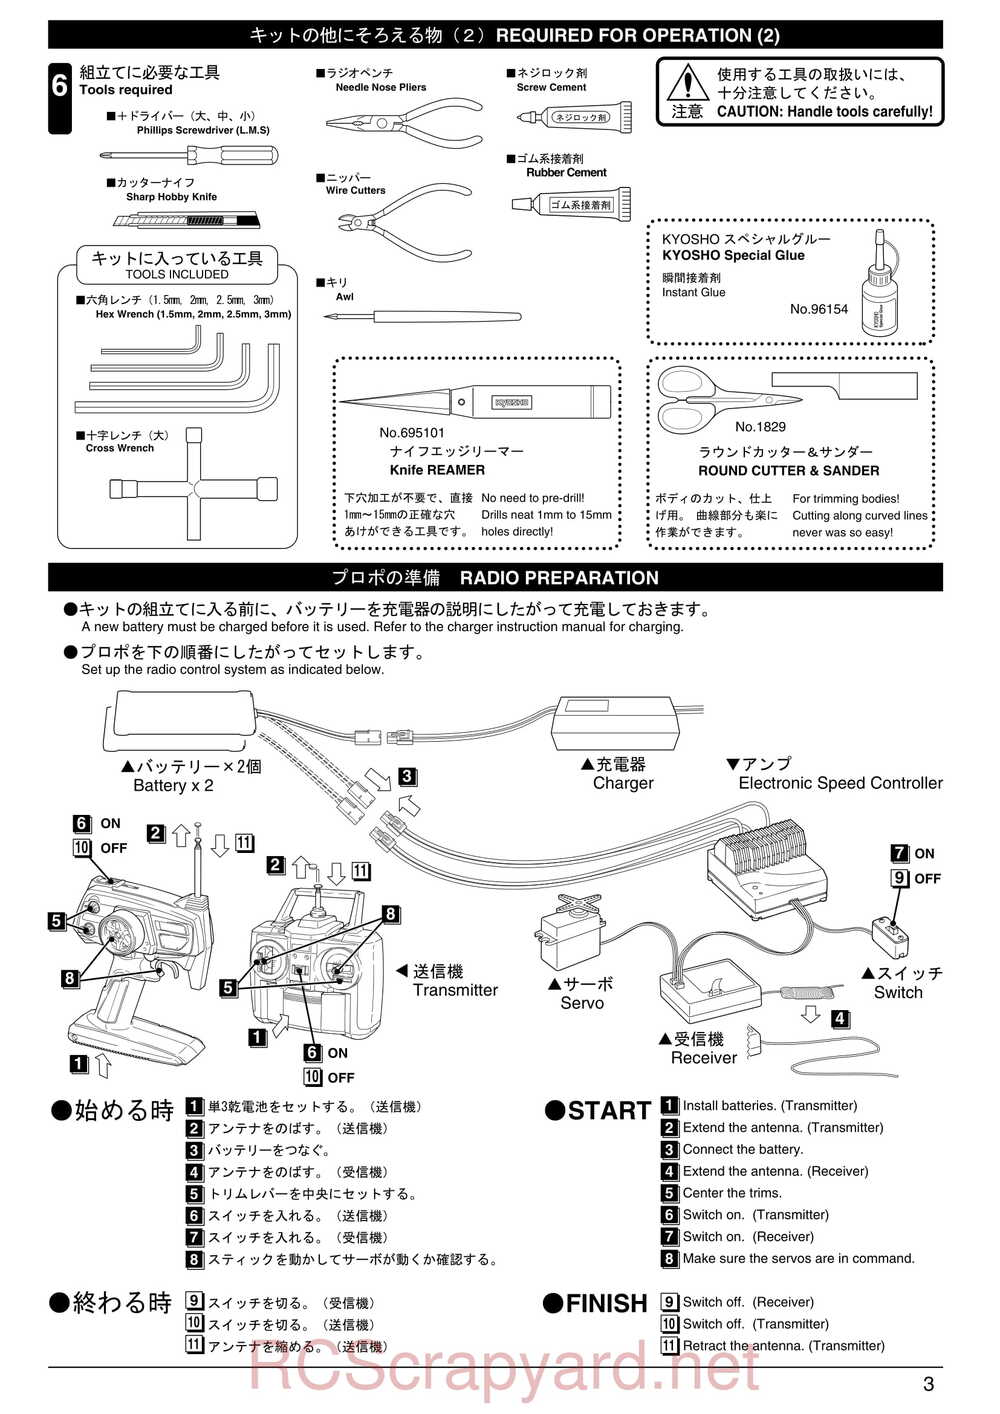 Kyosho - 30521b - Twin-Force - Manual - Page 03